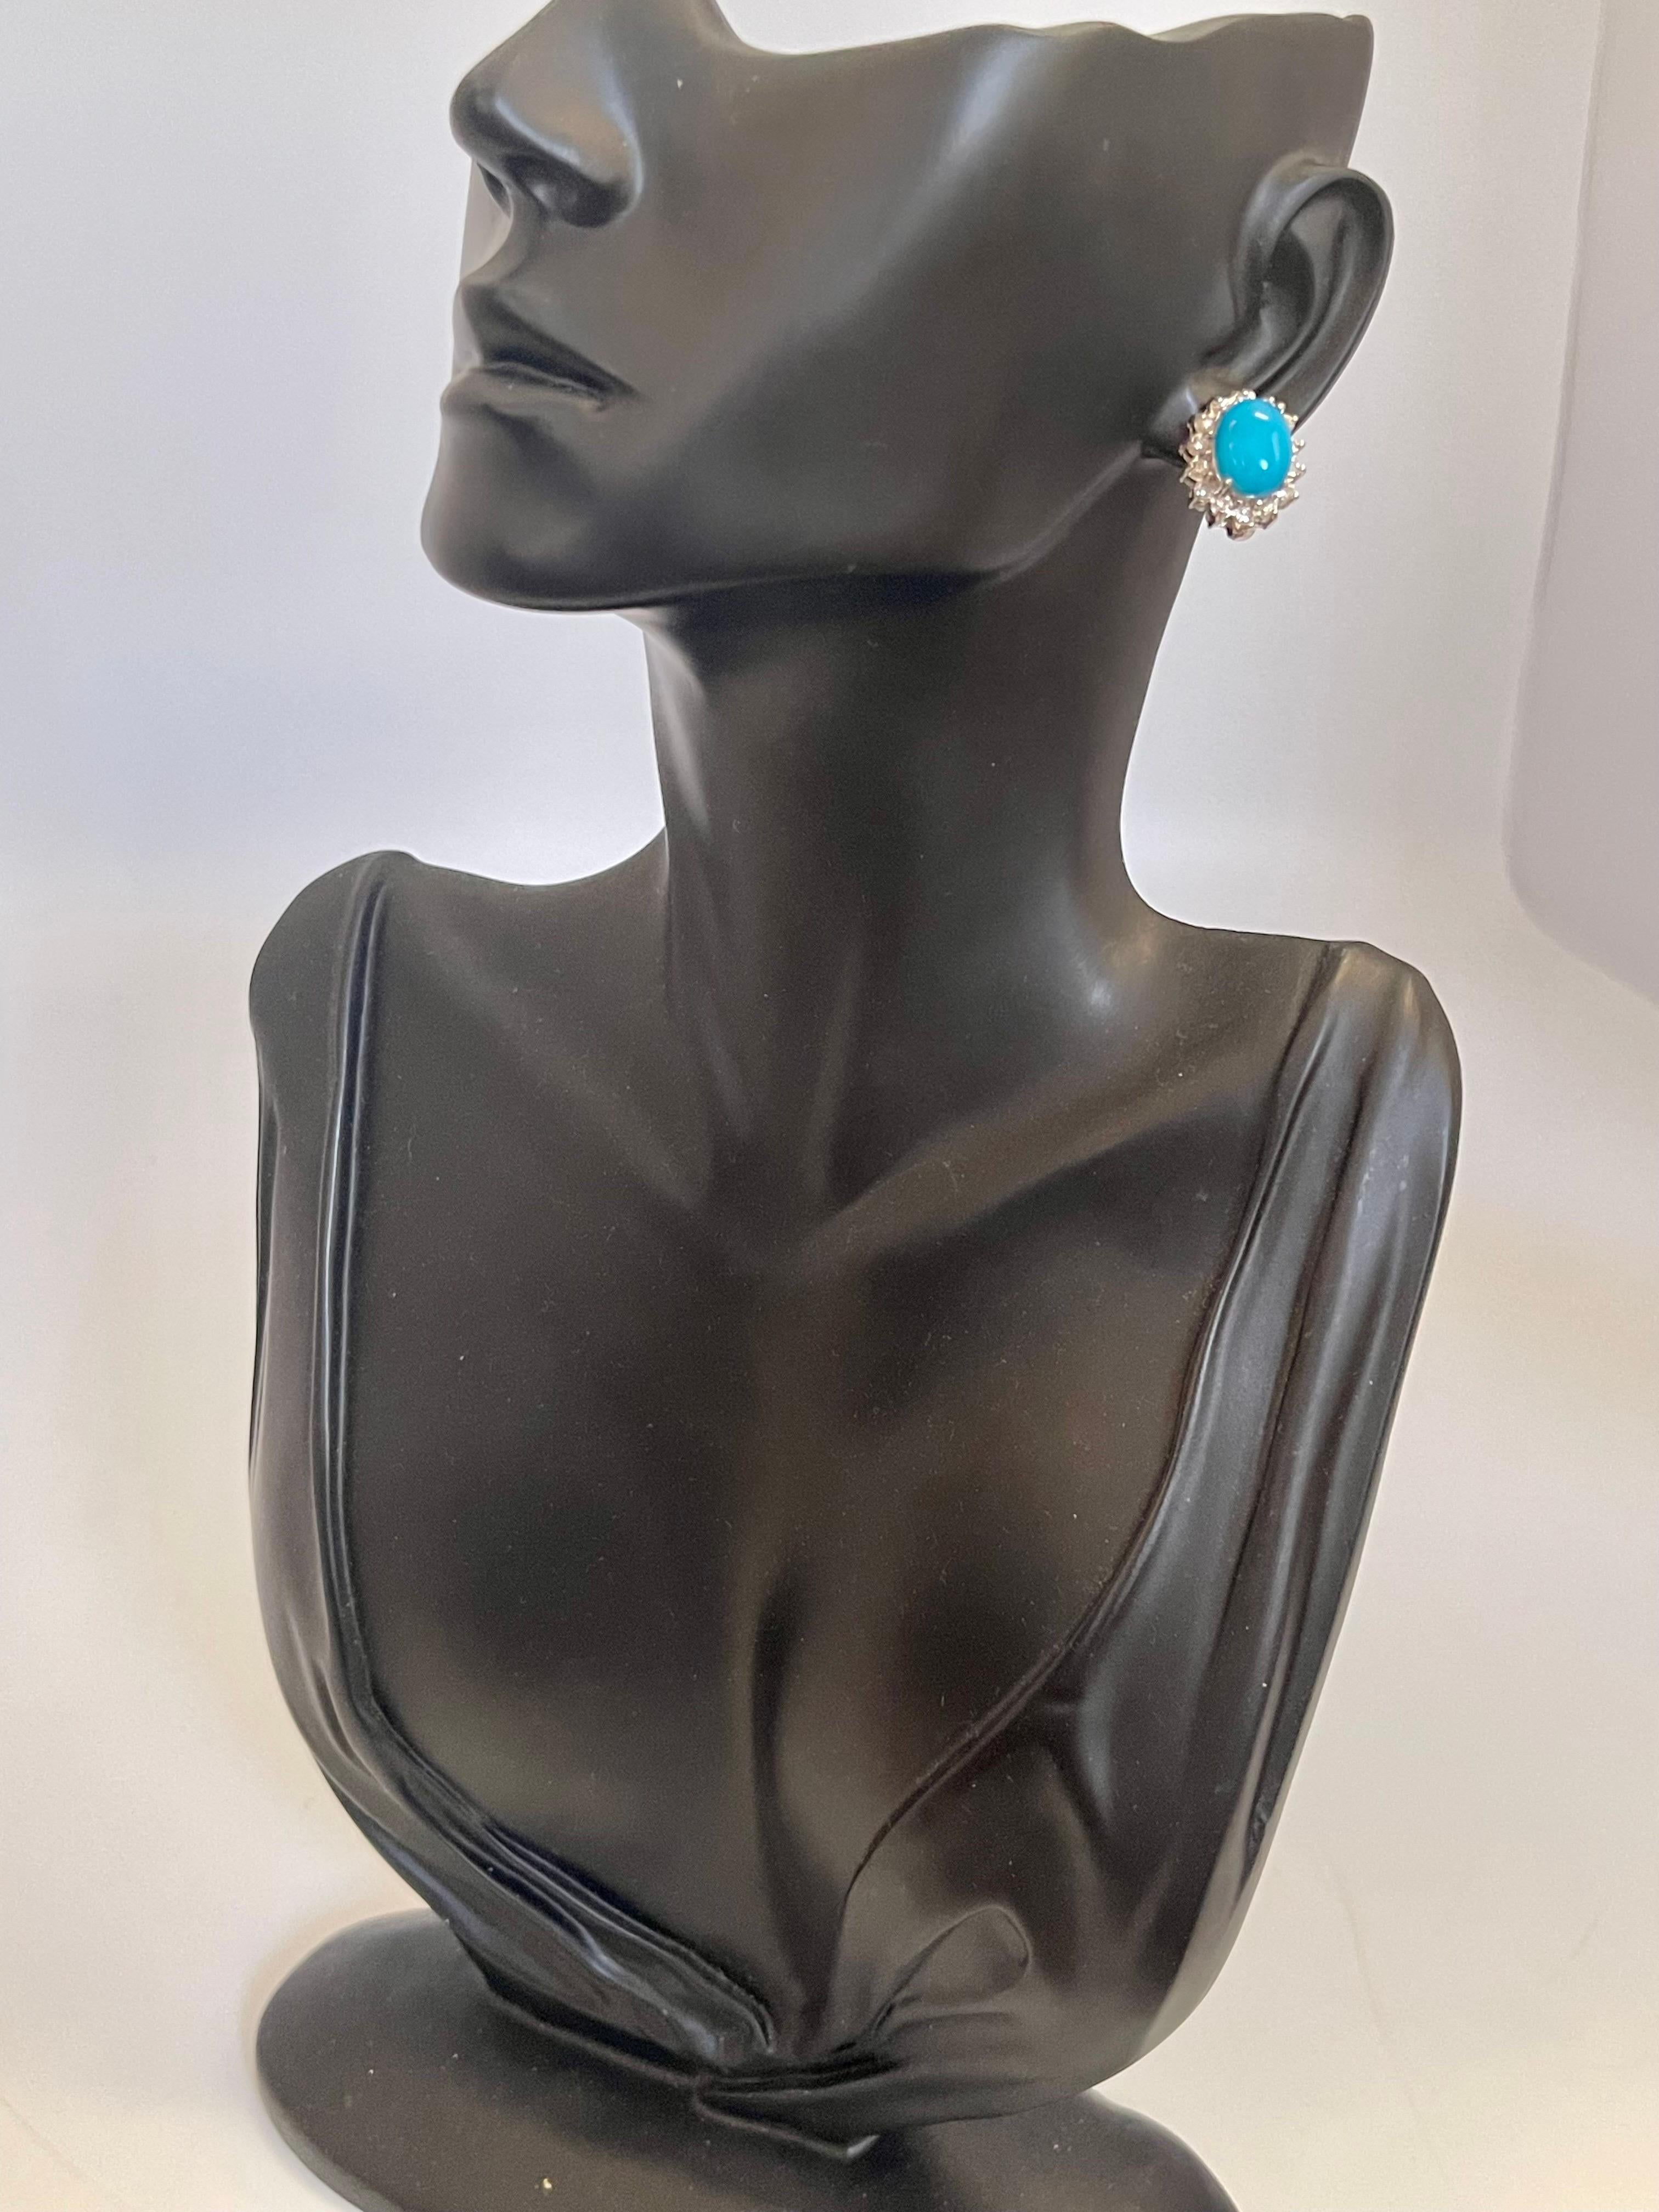 8 Ct Oval Sleeping Beauty Turquoise & 1 Ct Diamond Stud Earrings 14 K White Gold 2